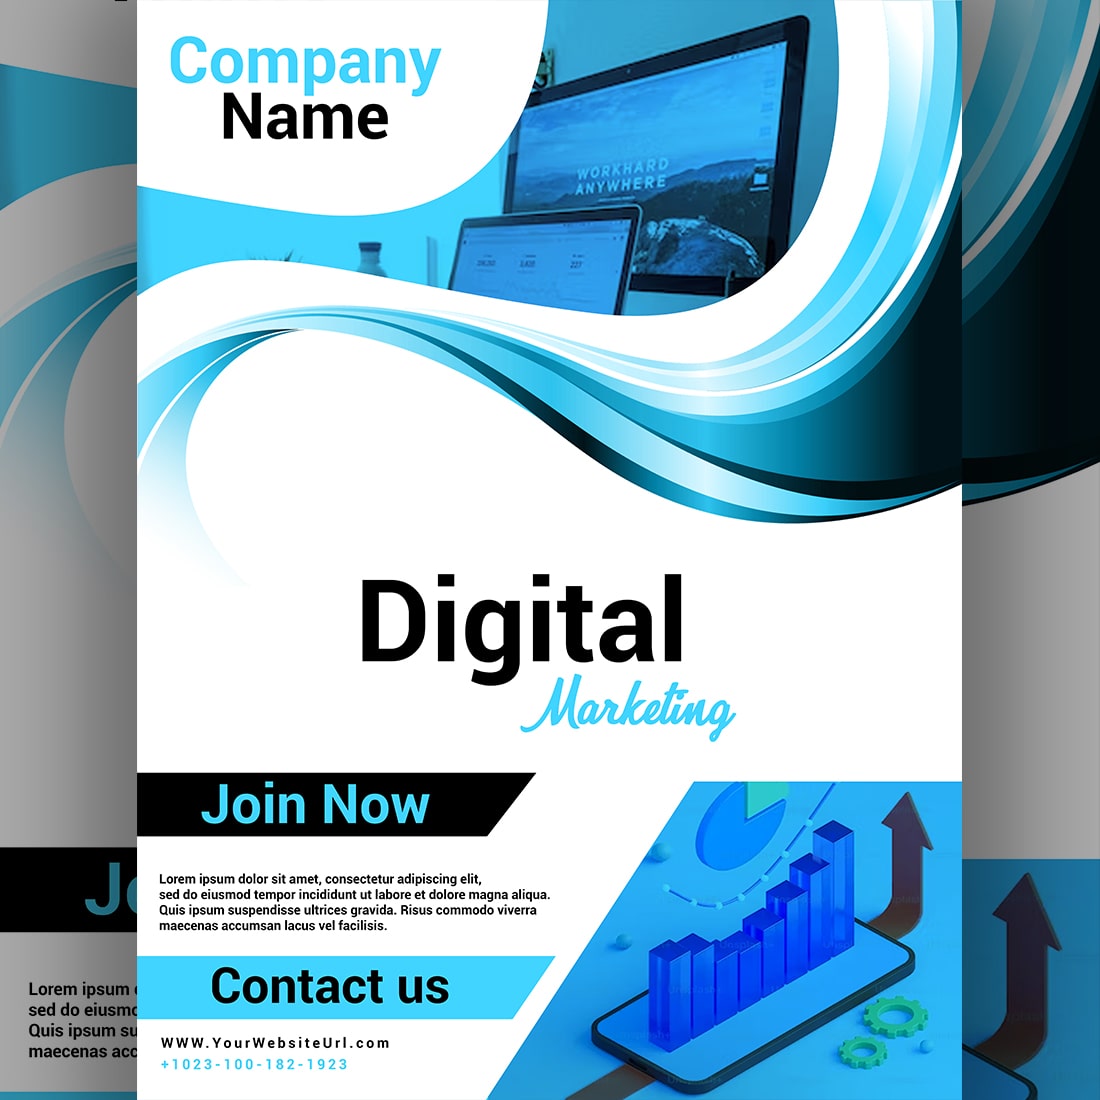 digital marketing poster design preview image.